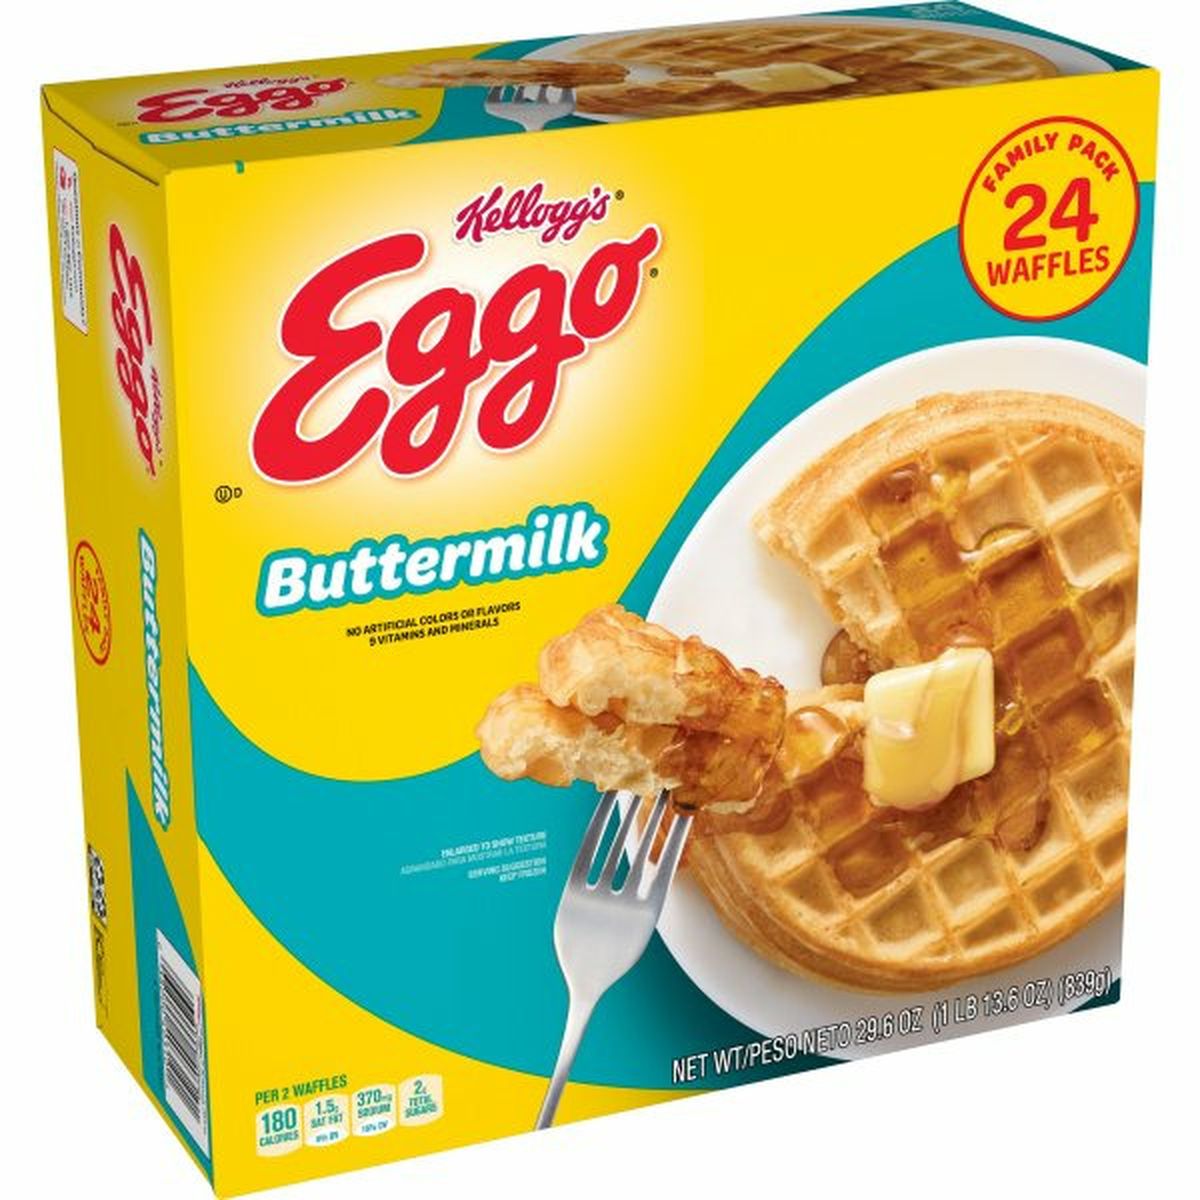 Calories in Eggo Frozen Breakfast Eggo Frozen Waffles, Buttermilk, Family Pack, Easy Breakfast, 24ct 29.6oz